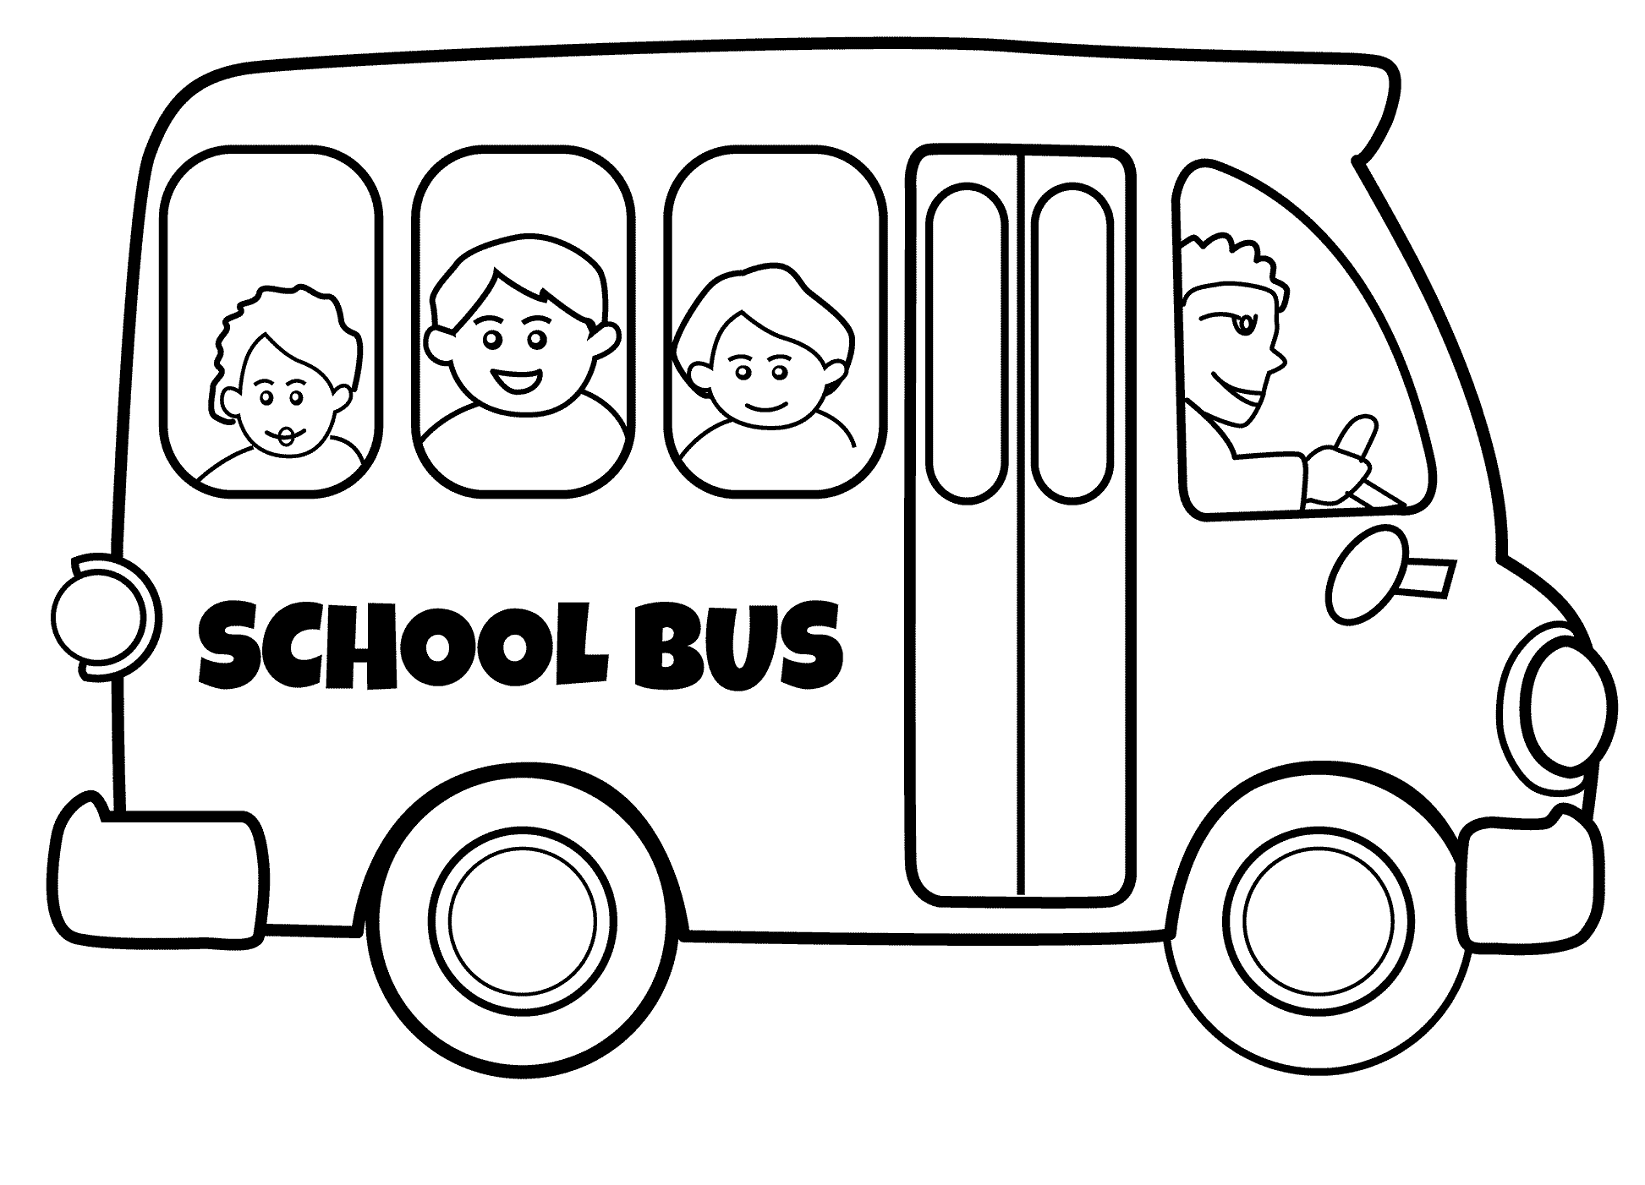 School bus Transportation Coloring Page